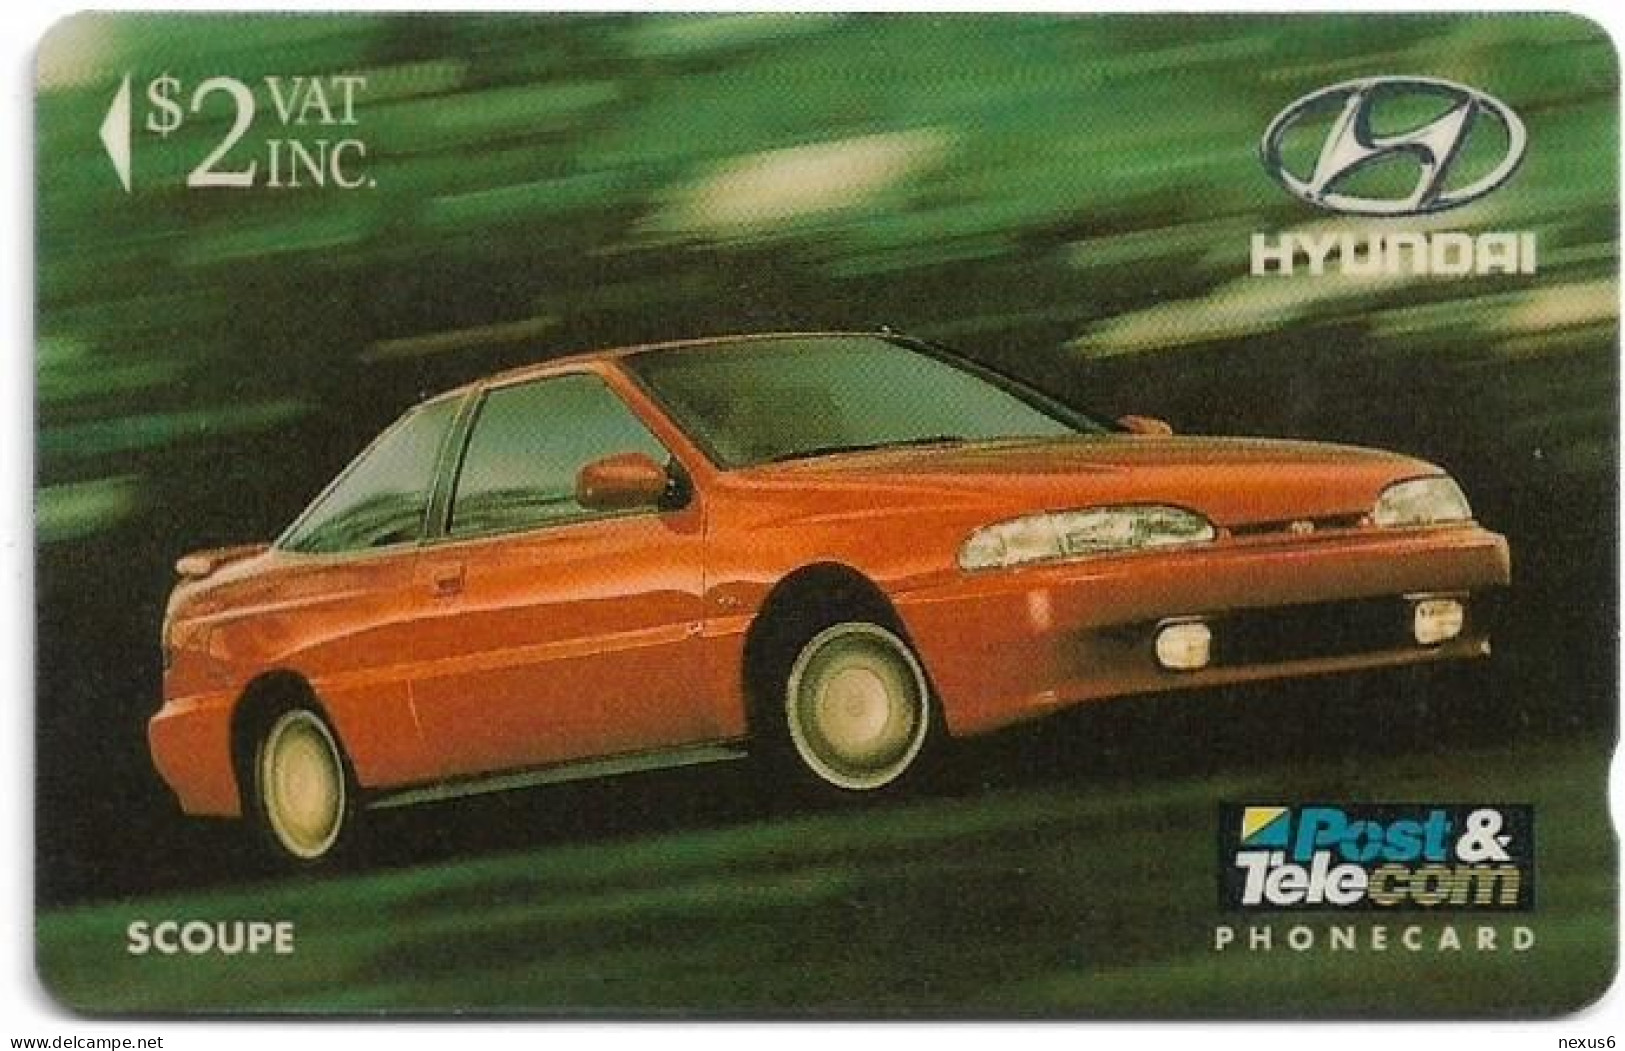 Fiji - Tel. Fiji - Martin Motor Co. - Hyundai Scoupe (Cn. On Silver Stripe) - 03FJB - 1993, 2$, Used - Fiji